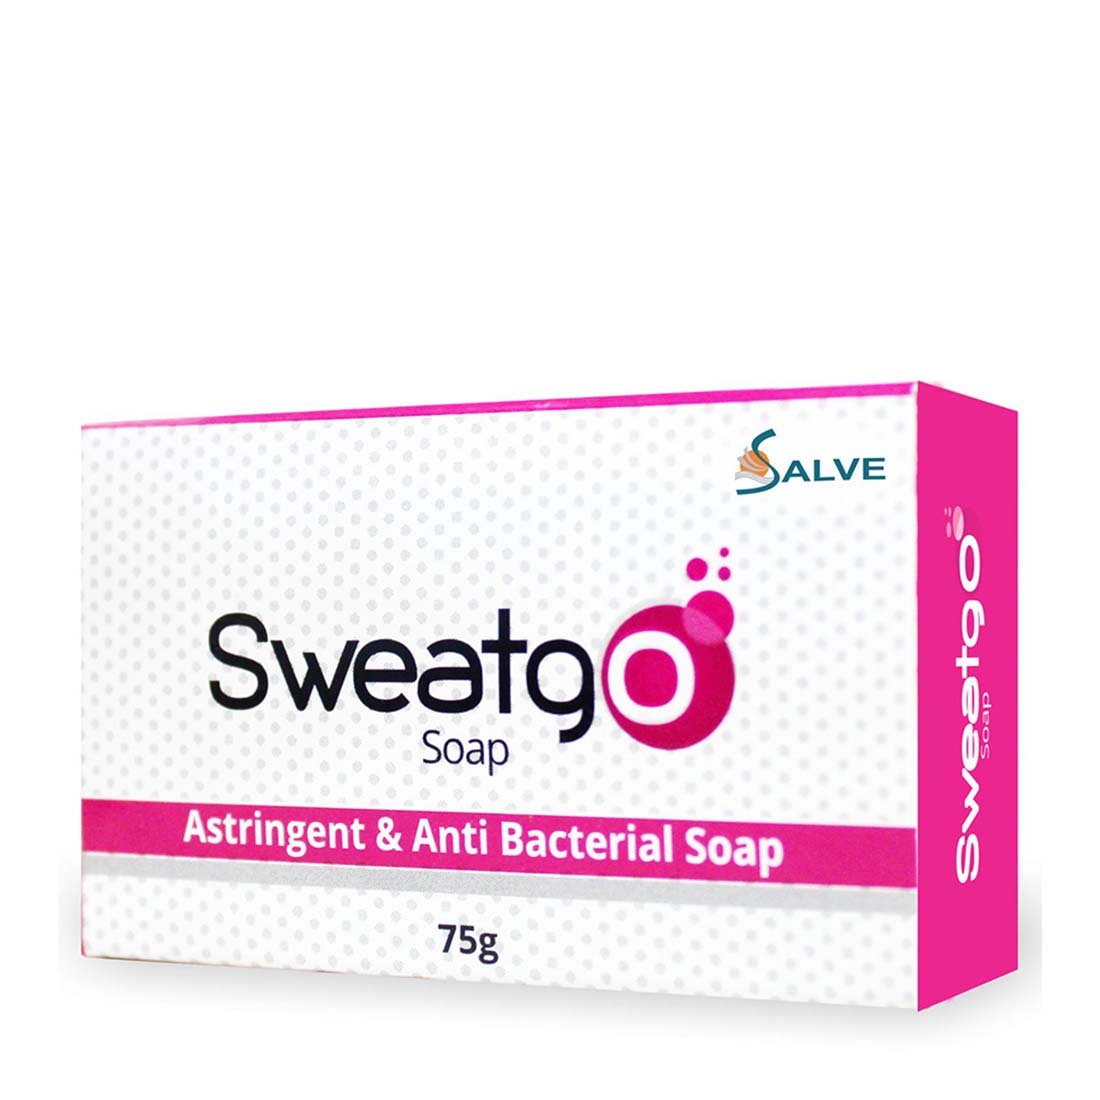 sweatgo soap packs